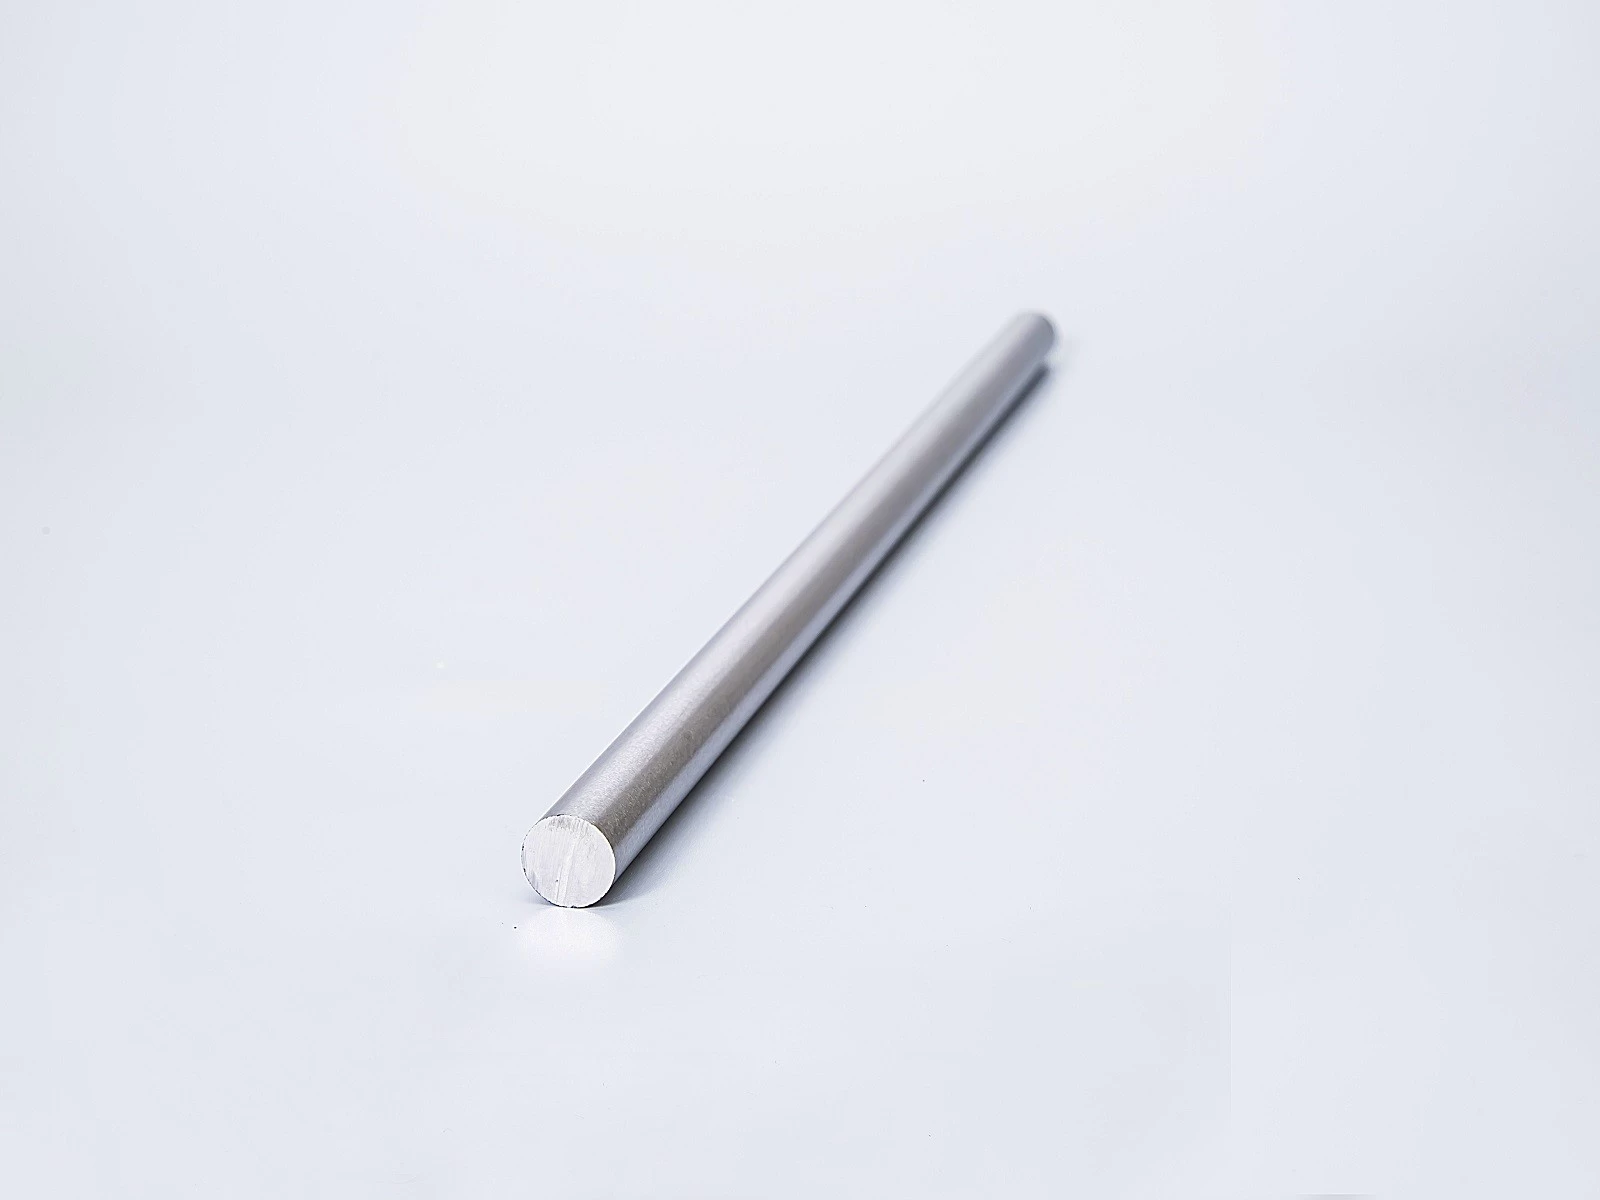 Carbide Long Rod Rectified h6